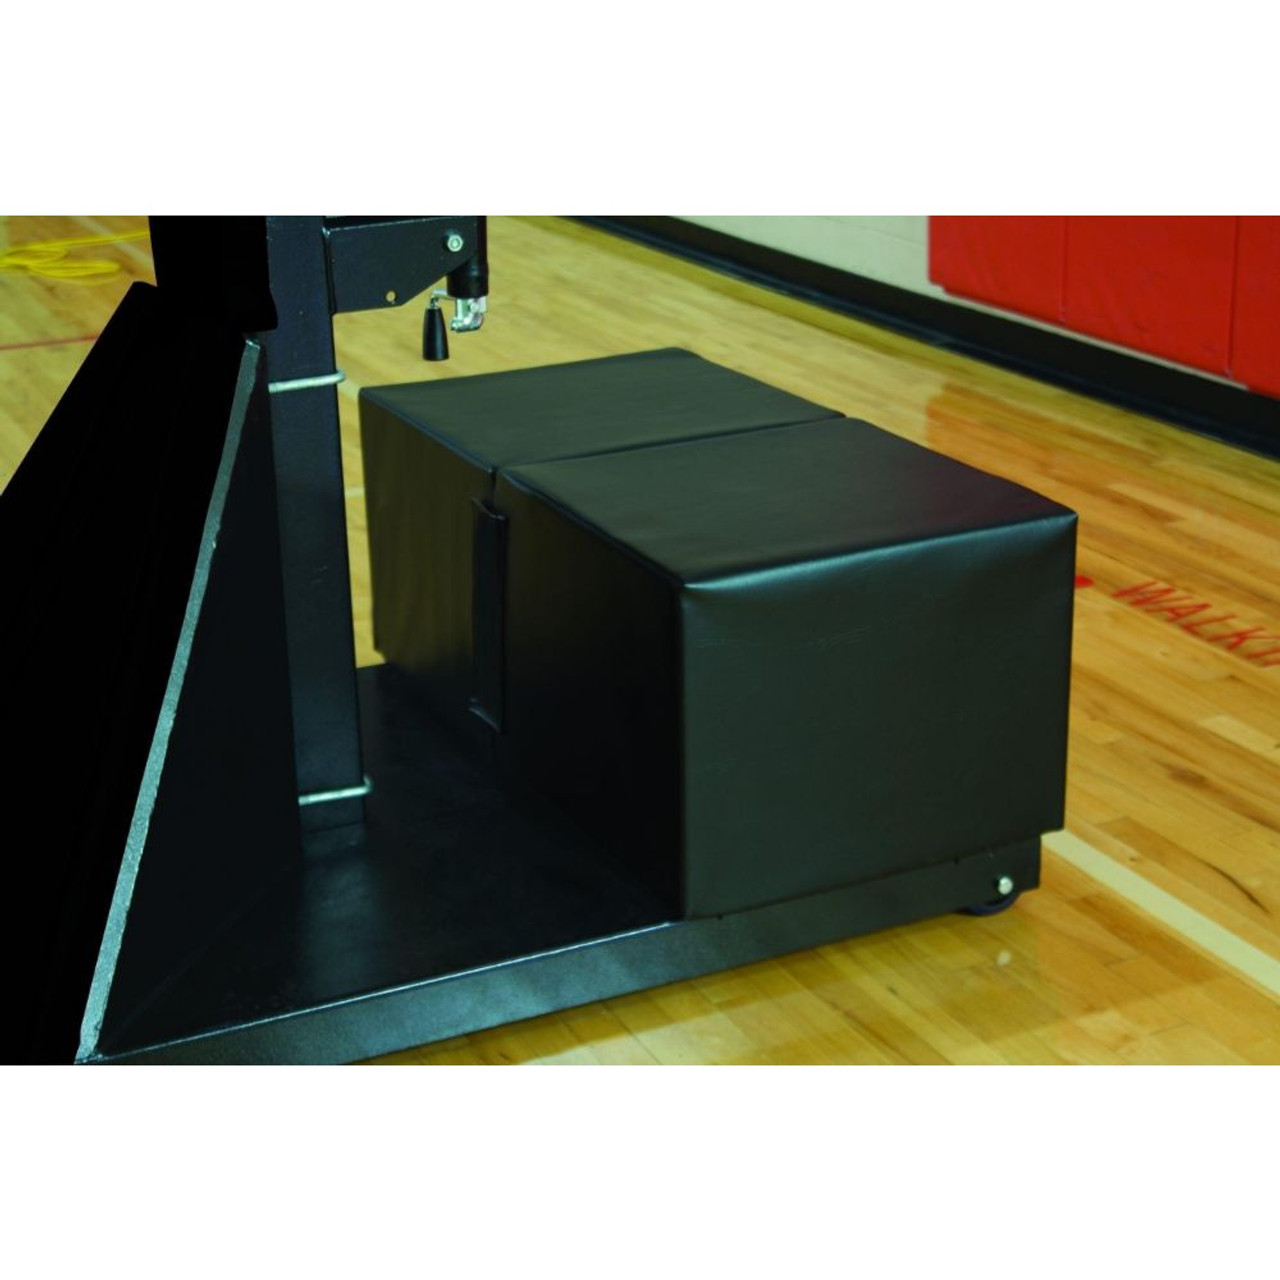 Glass Max Portable Adjustable Basketball System - Ballast